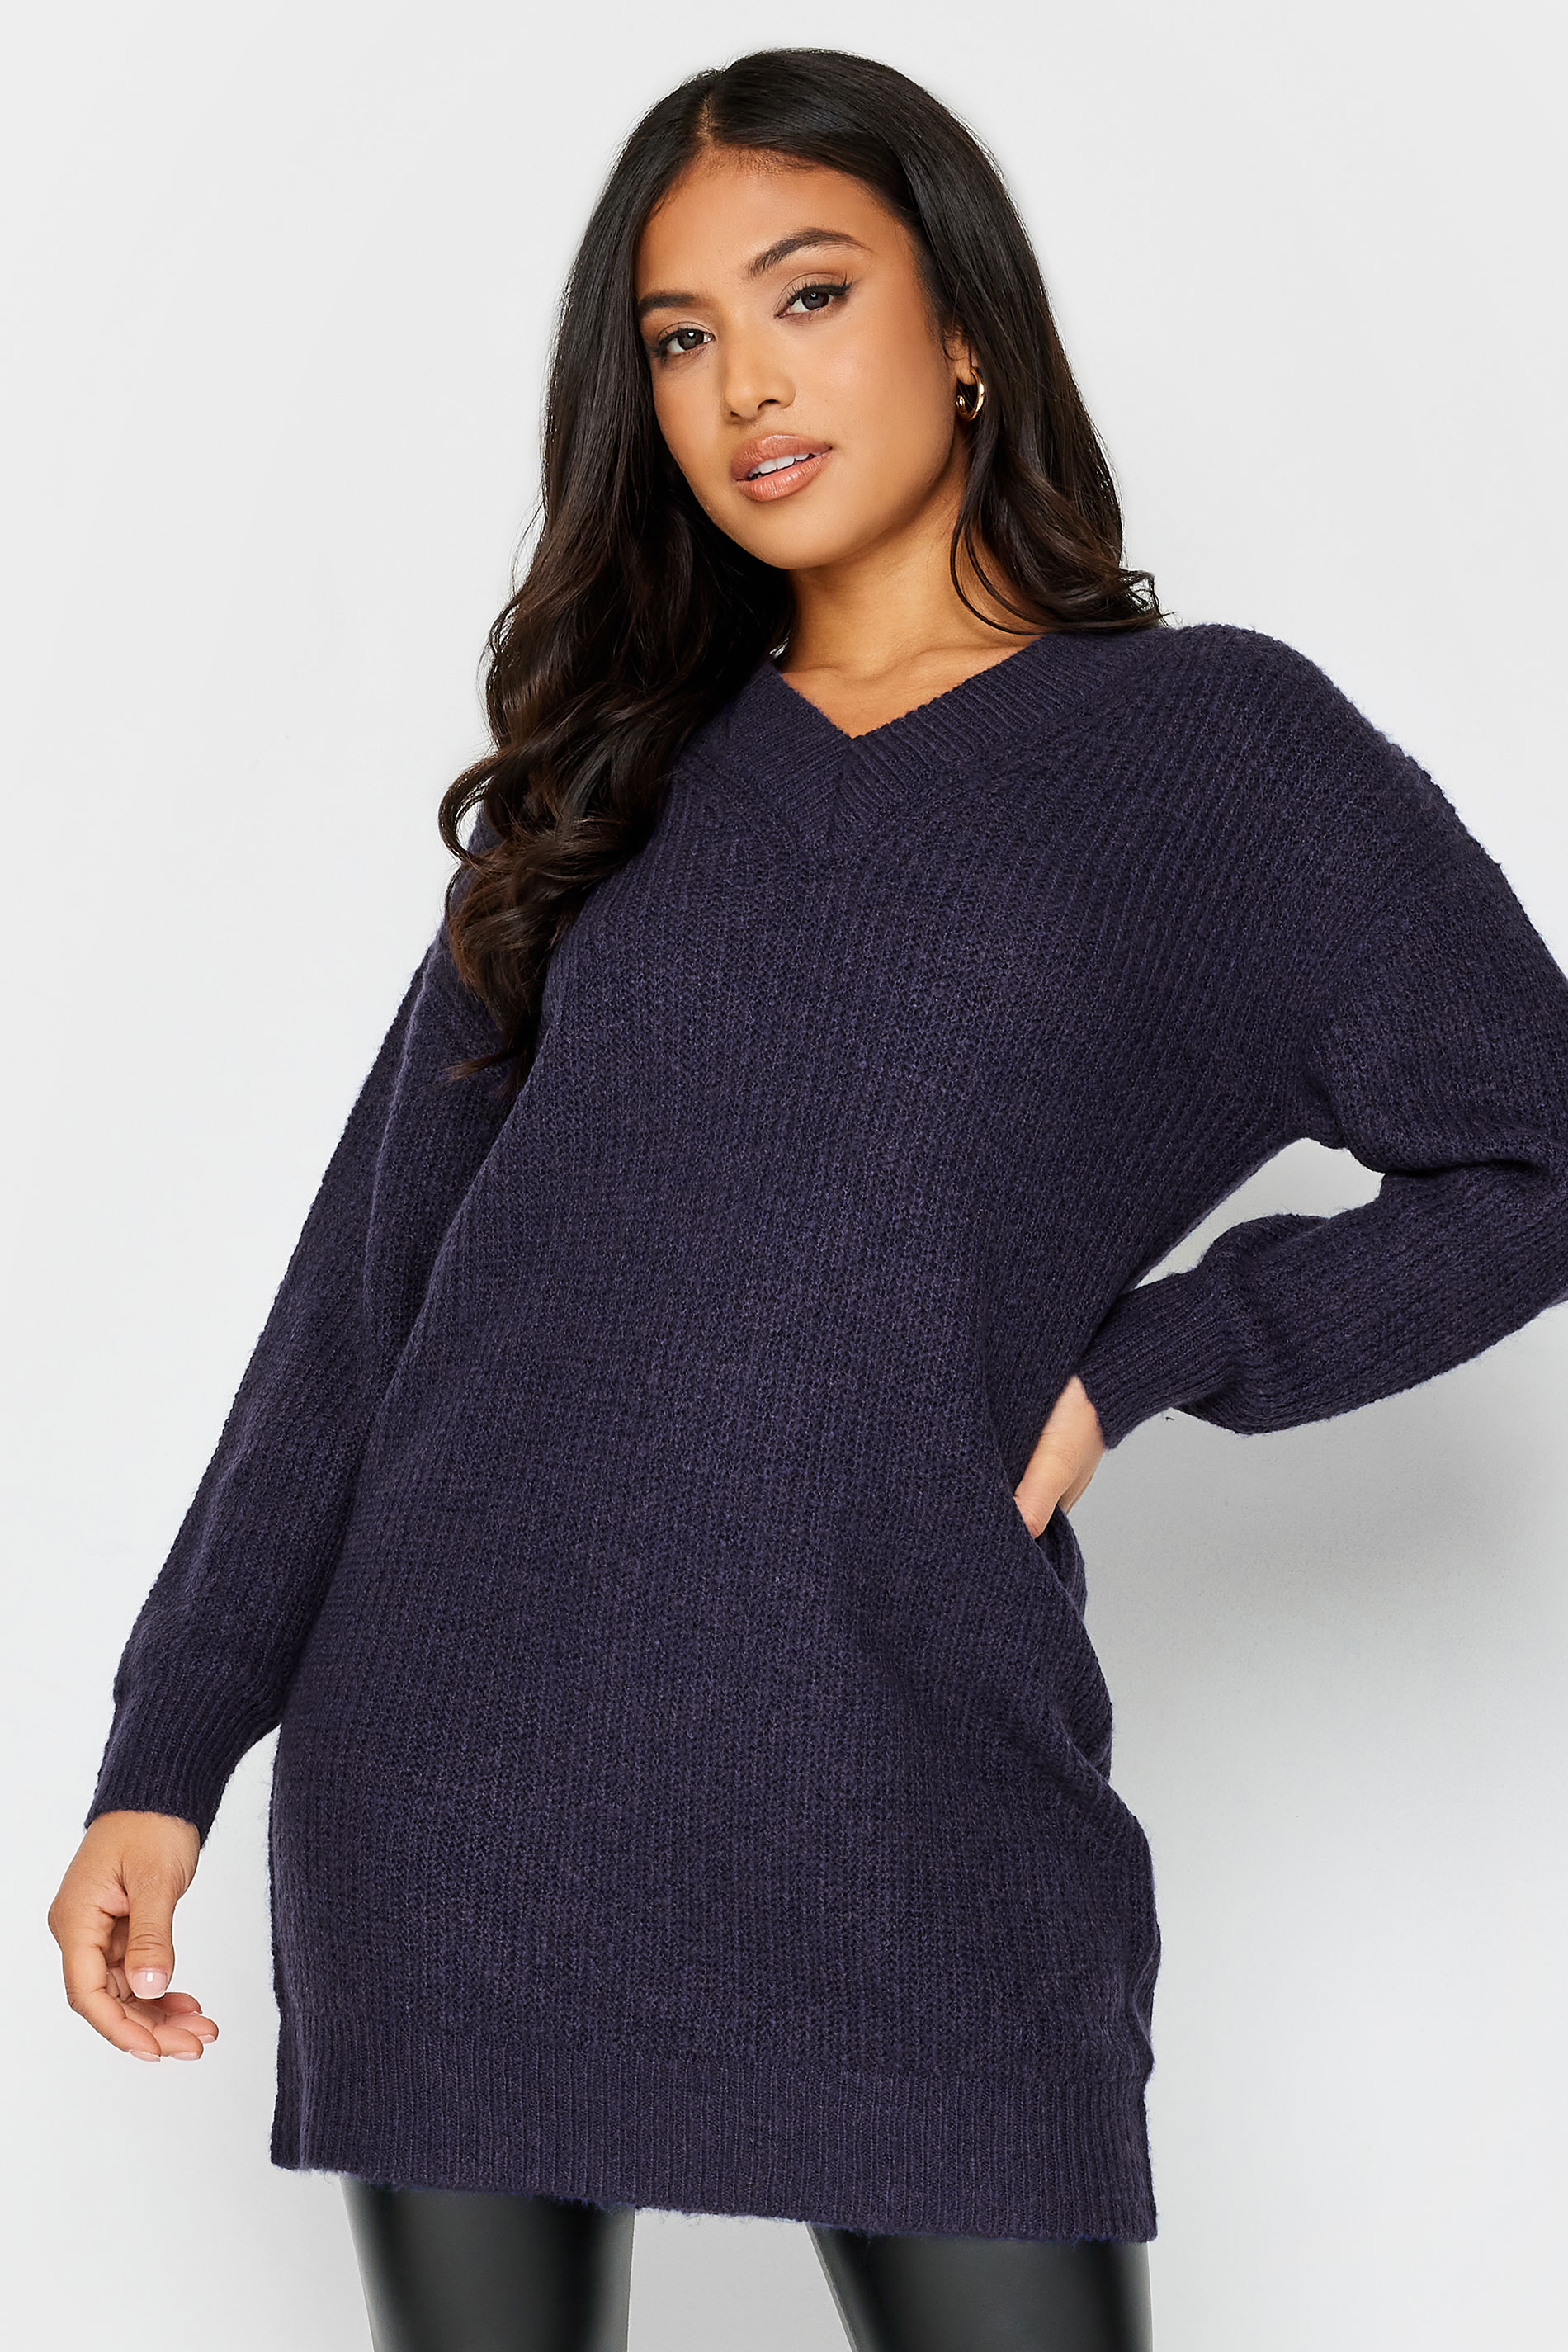 Pixiegirl Navy Blue Vneck Knitted Tunic Top 18-20 Pixiegirl | Petite Women's Long Sleeve Tops product